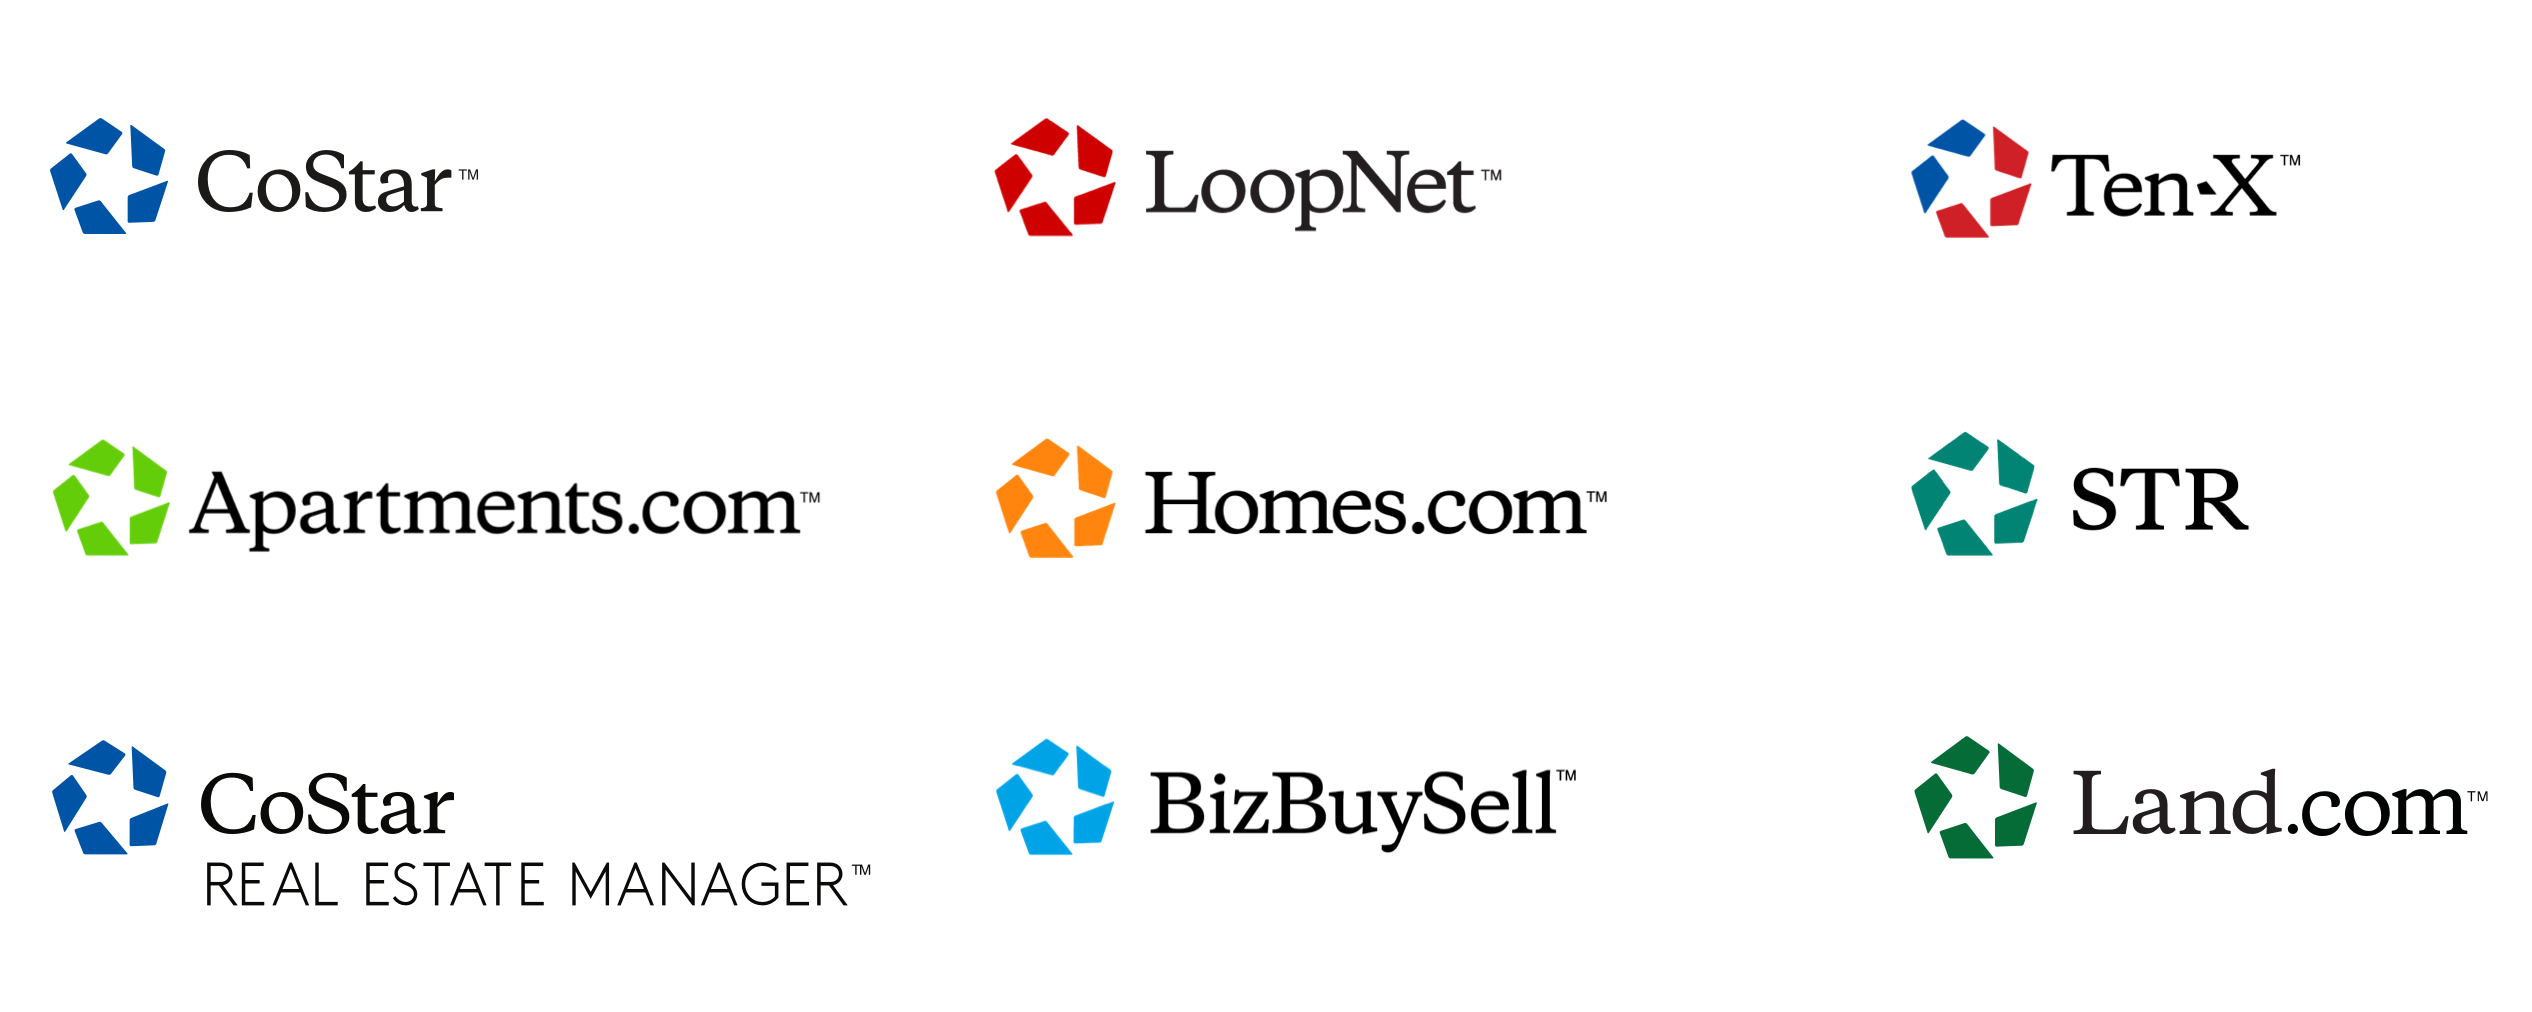 CoStar brand logos